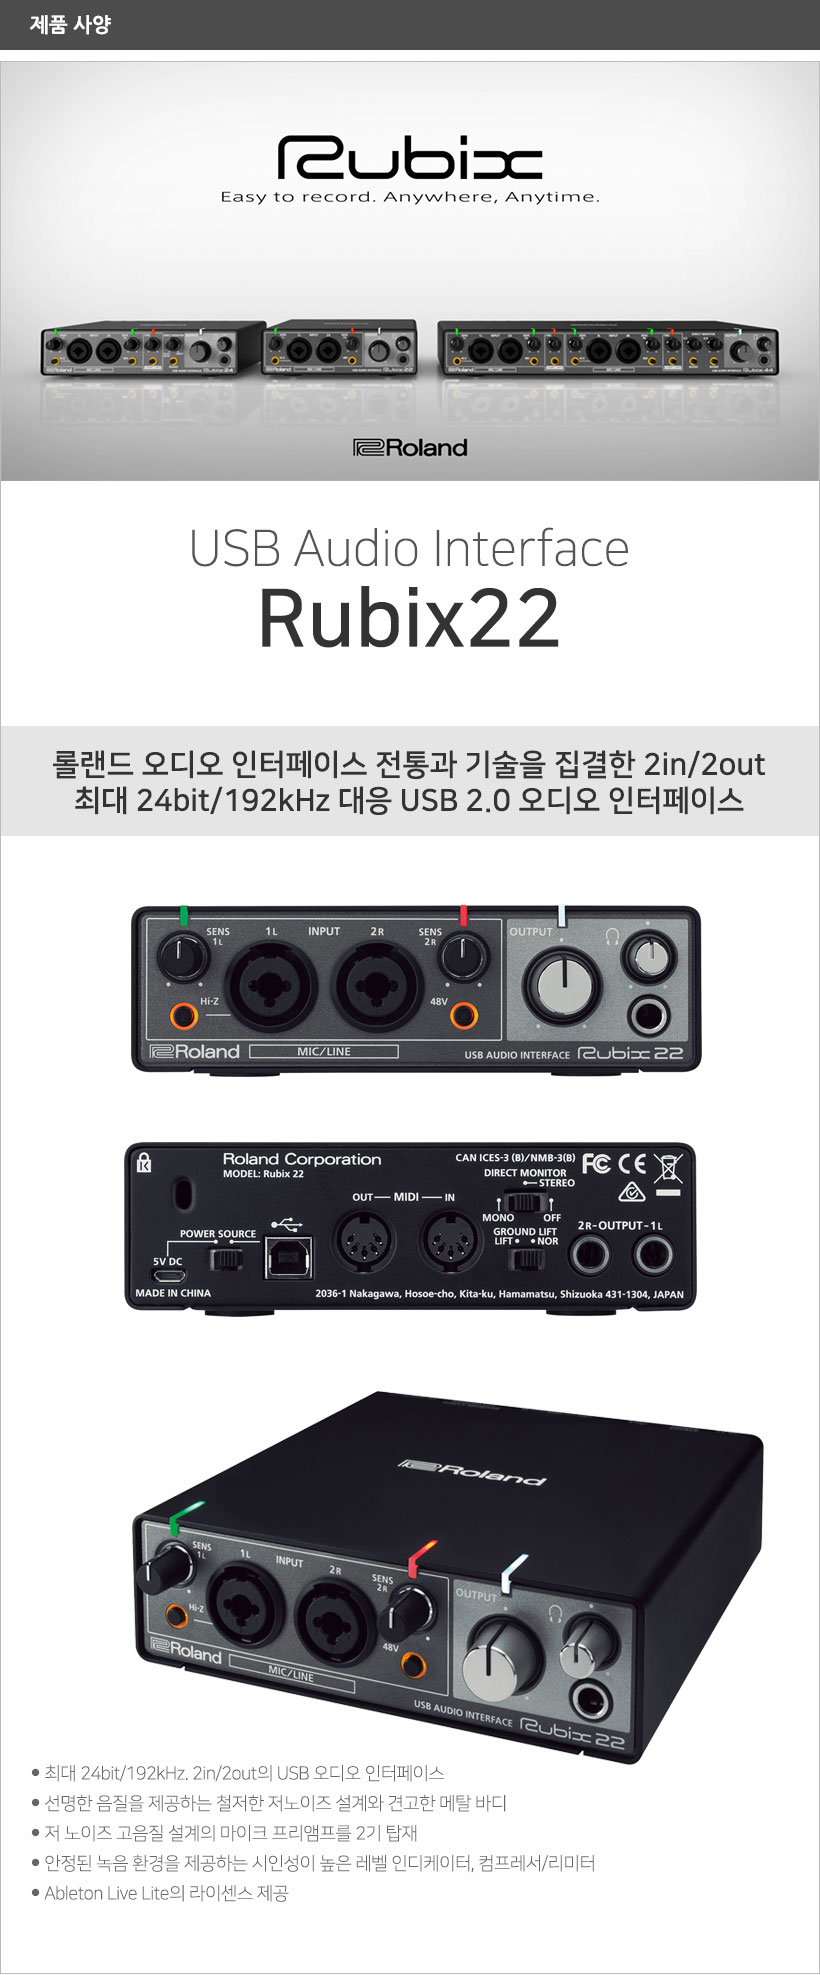 Rubix22 제품사양